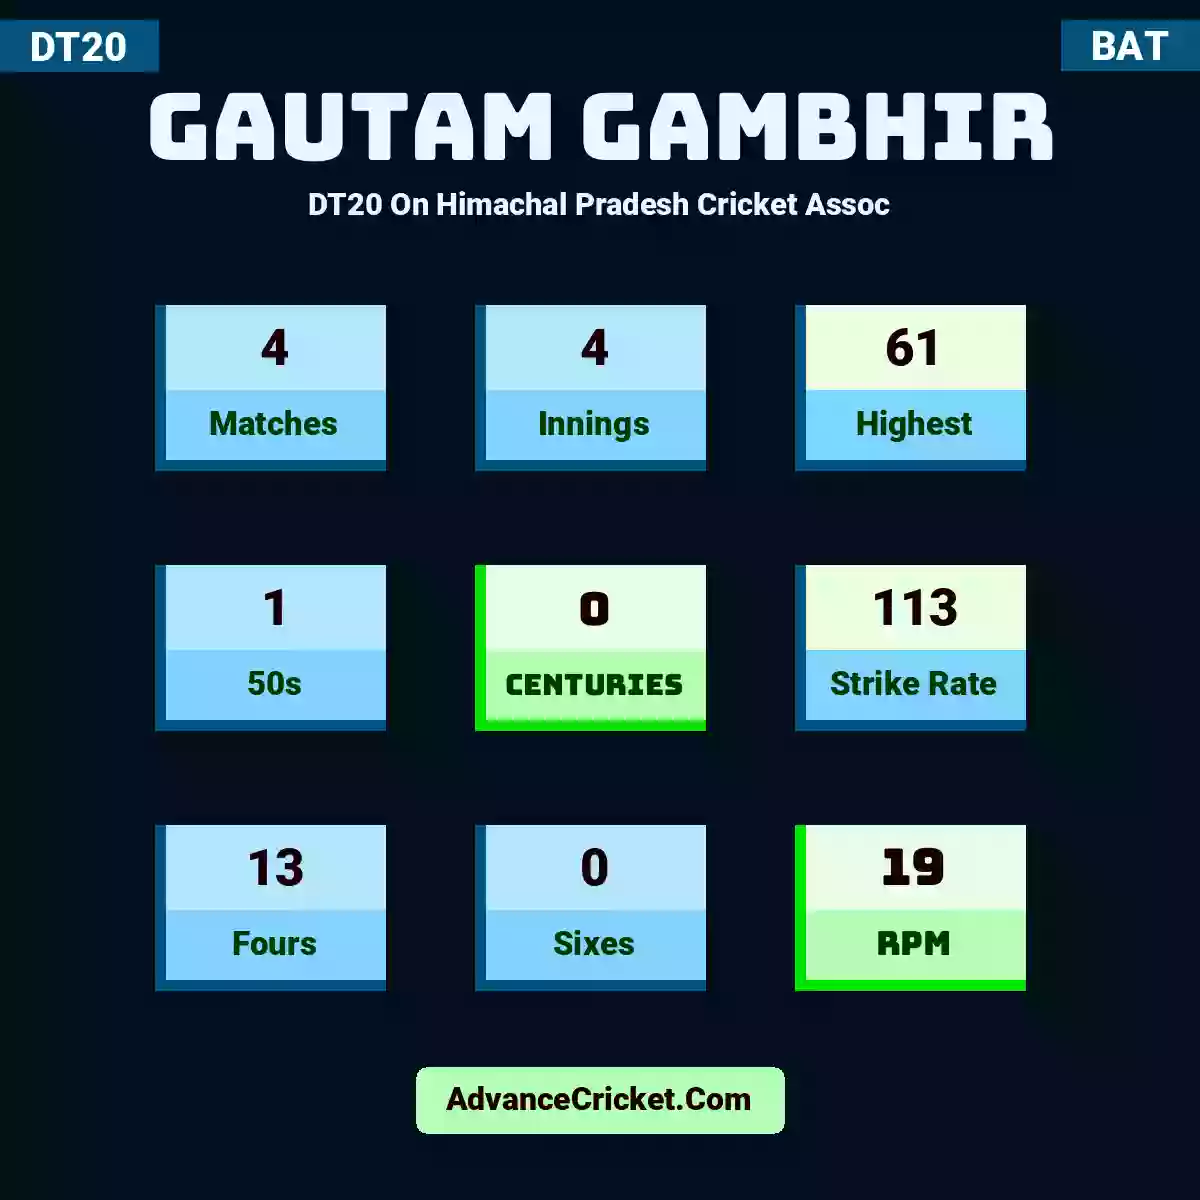 Gautam Gambhir DT20  On Himachal Pradesh Cricket Assoc, Gautam Gambhir played 4 matches, scored 61 runs as highest, 1 half-centuries, and 0 centuries, with a strike rate of 113. G.Gambhir hit 13 fours and 0 sixes, with an RPM of 19.